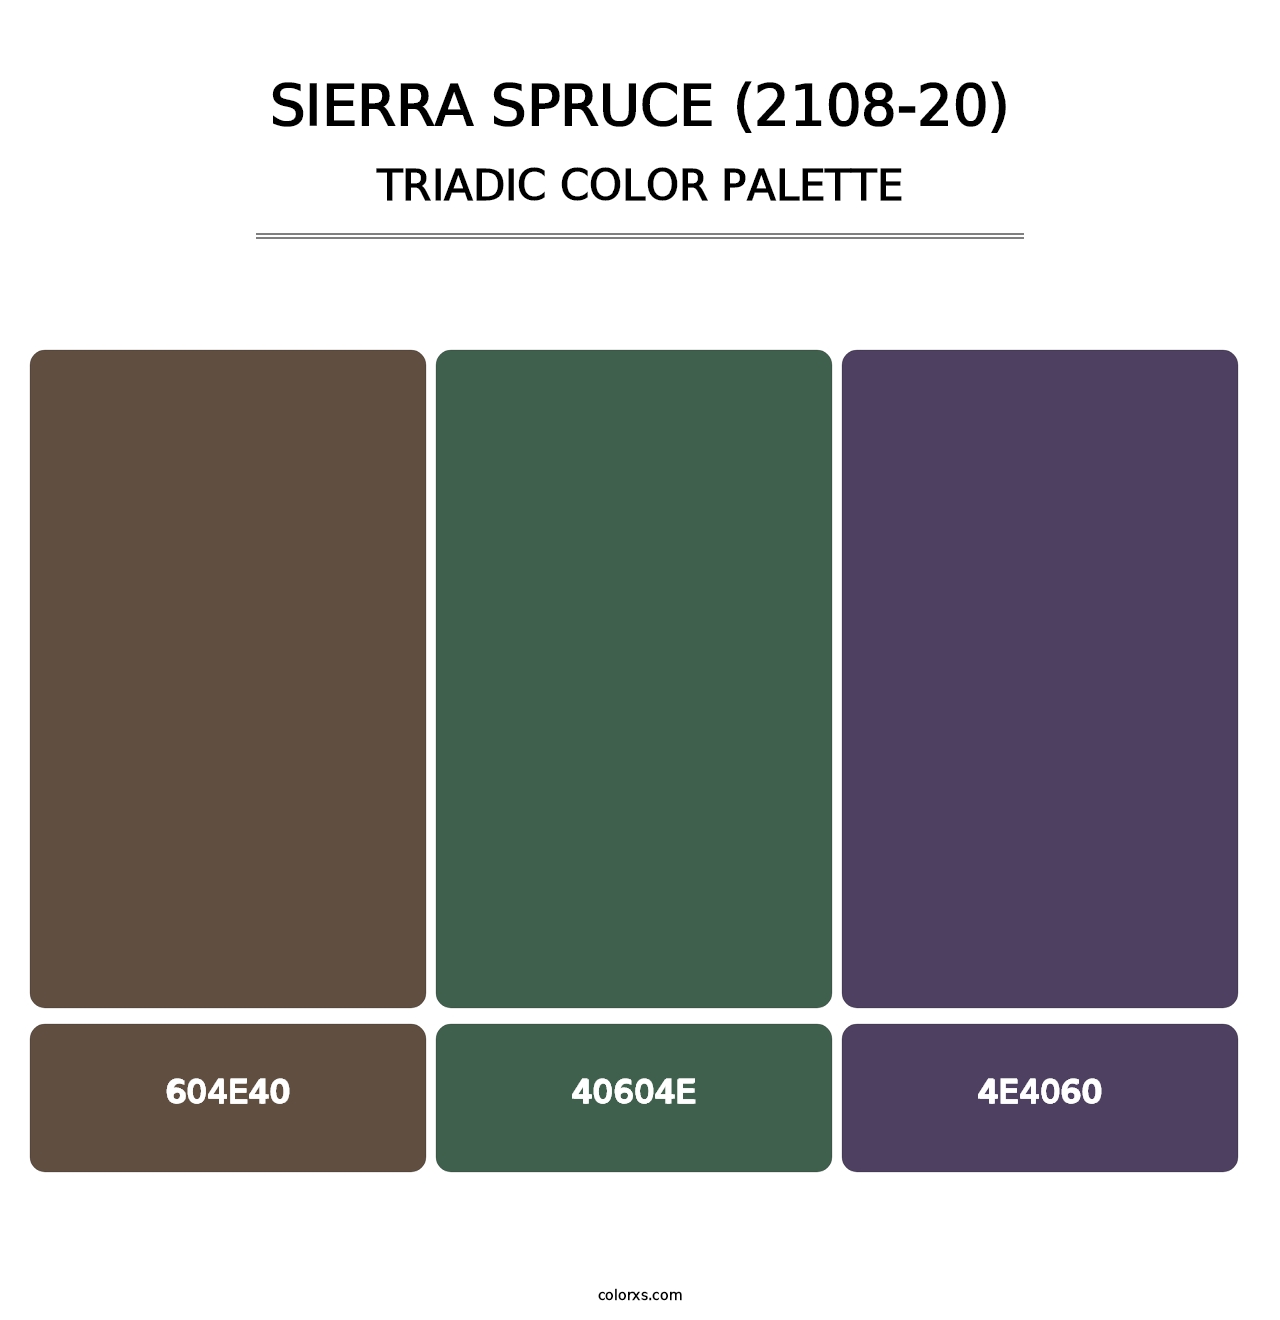 Sierra Spruce (2108-20) - Triadic Color Palette